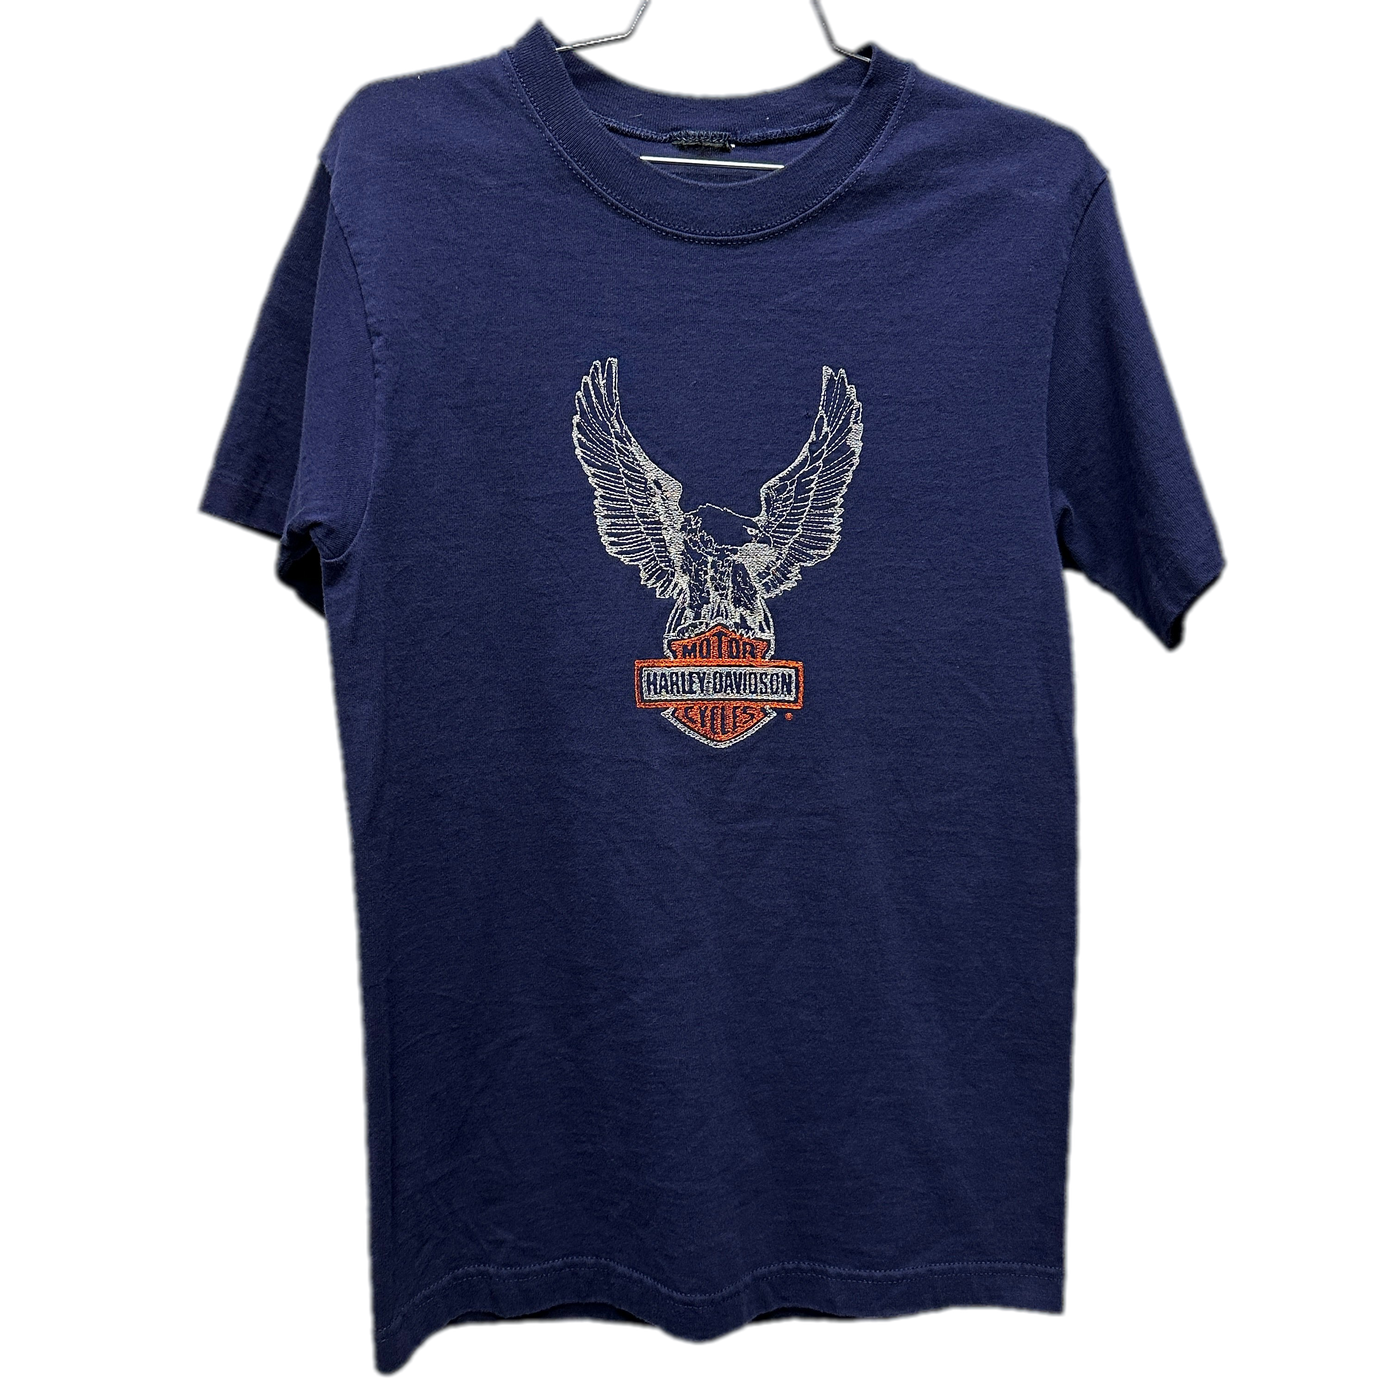 '96 Embroidered American Eagle Blue Harley Davidson T-shirt sz S